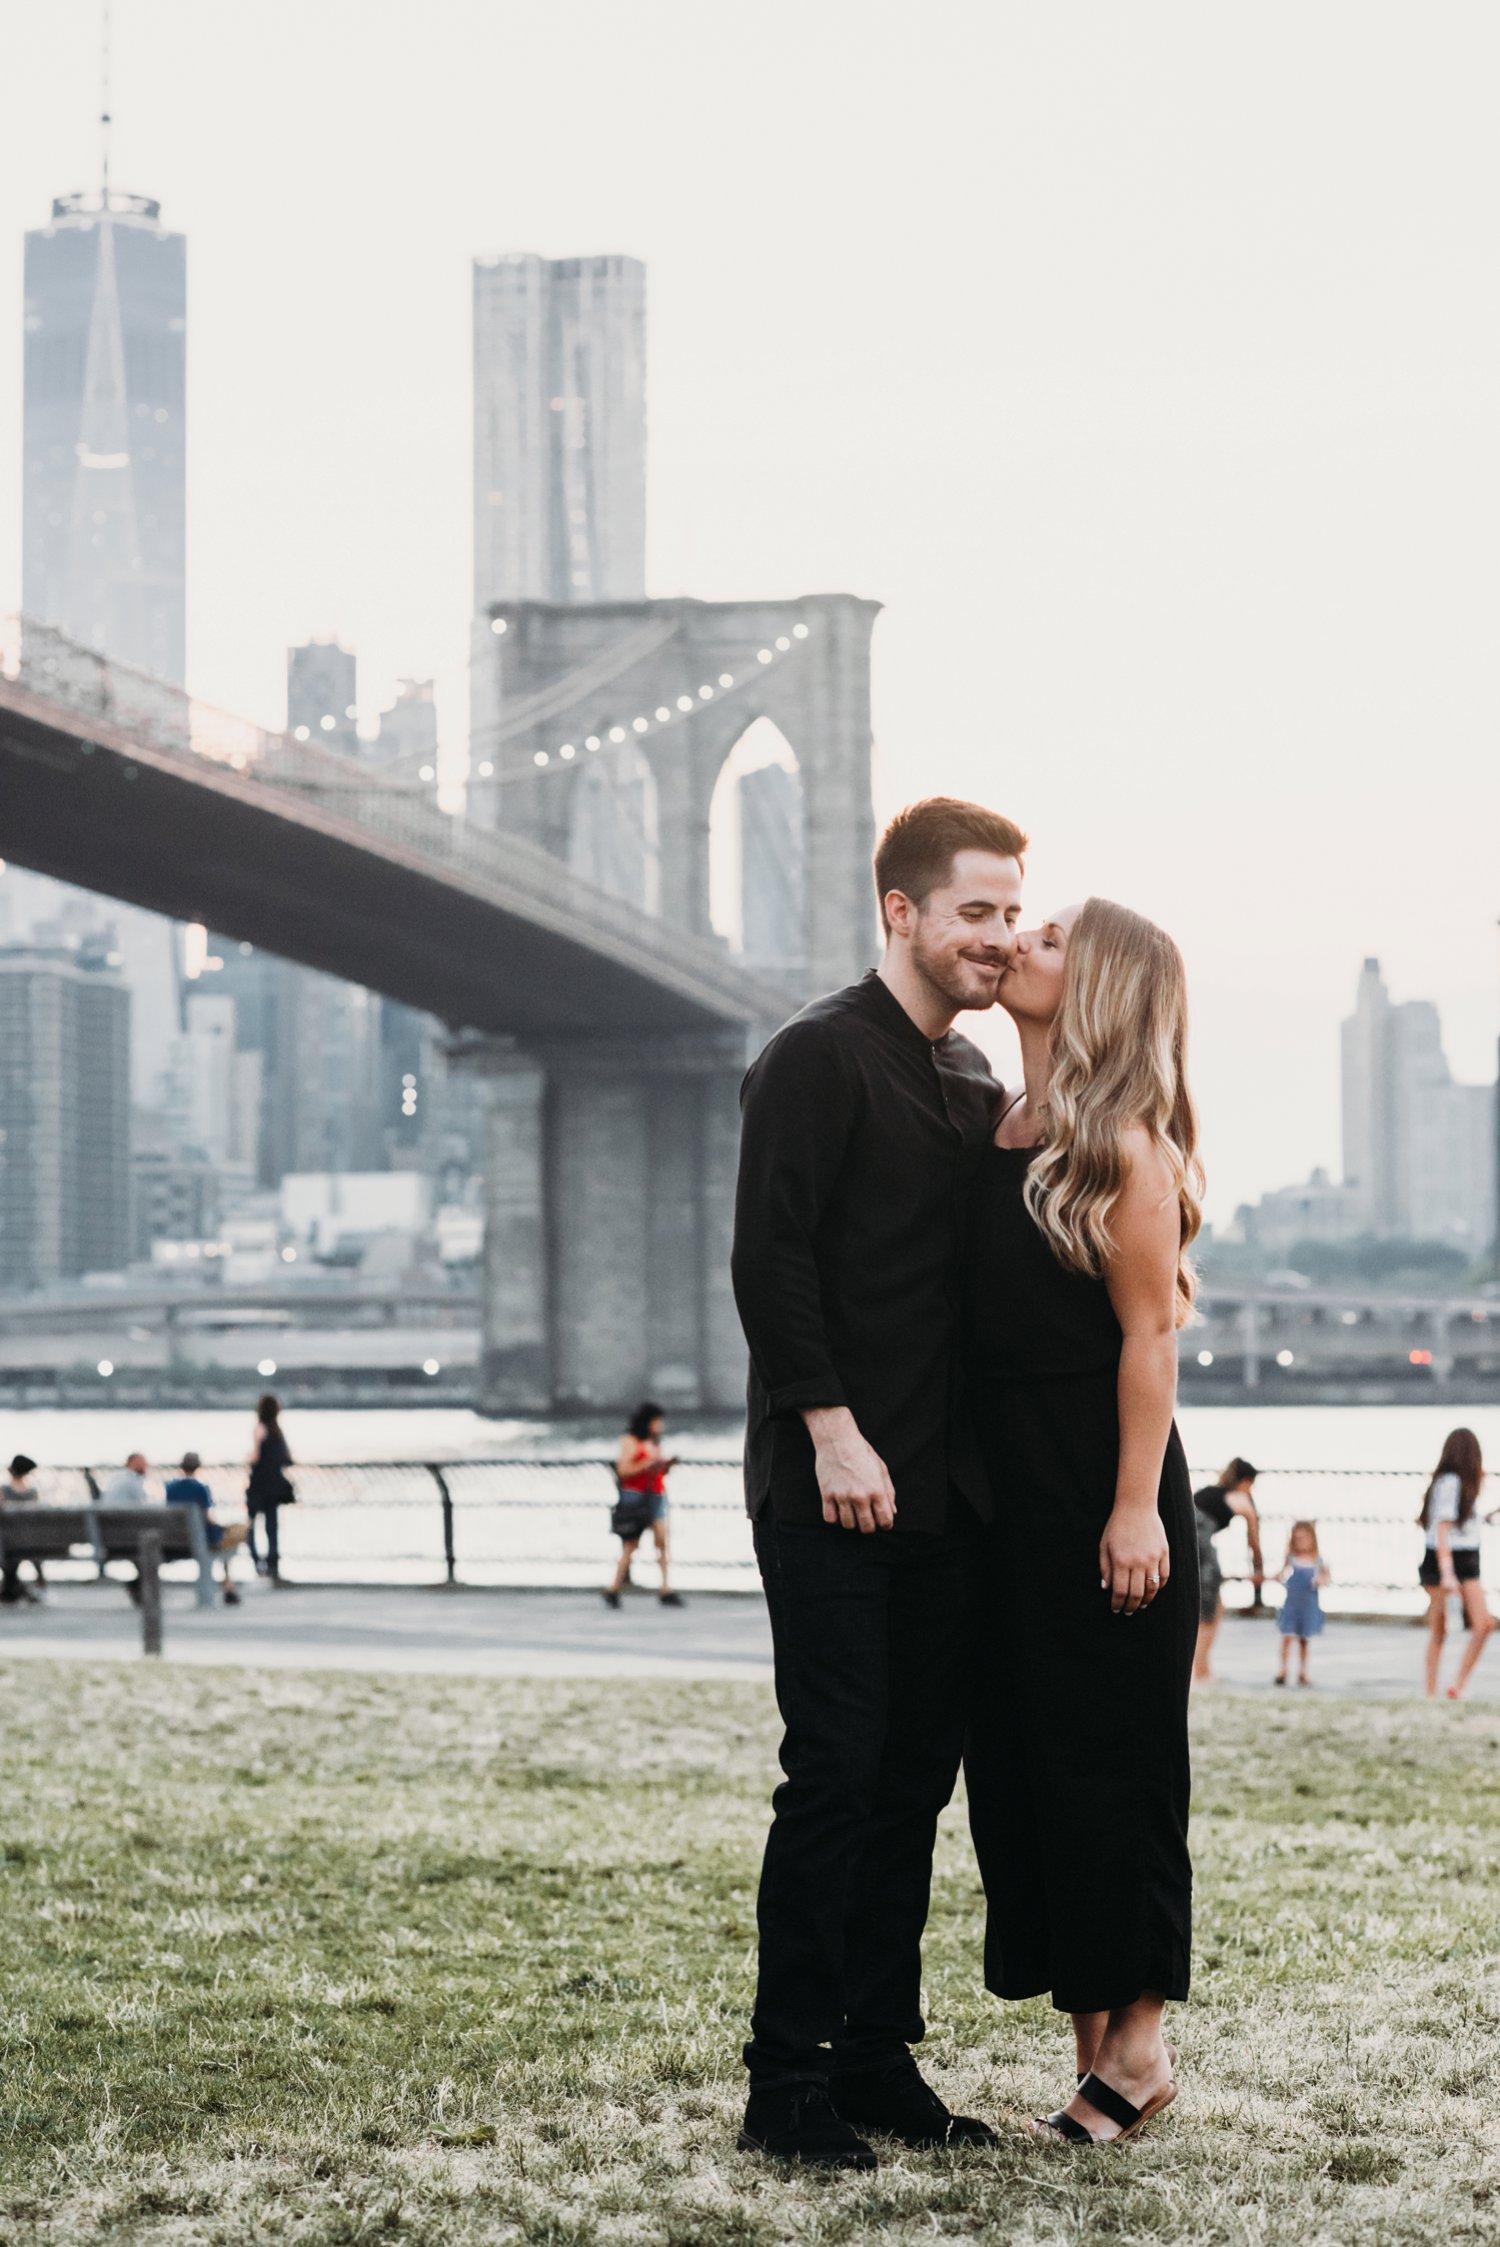  images by feliciathephotographer.com | destination wedding photographer | new york city | brooklyn bridge | proposal | engagement | whimsical | romantic | true love | she said yes | casual | diamond ring | kiss | 